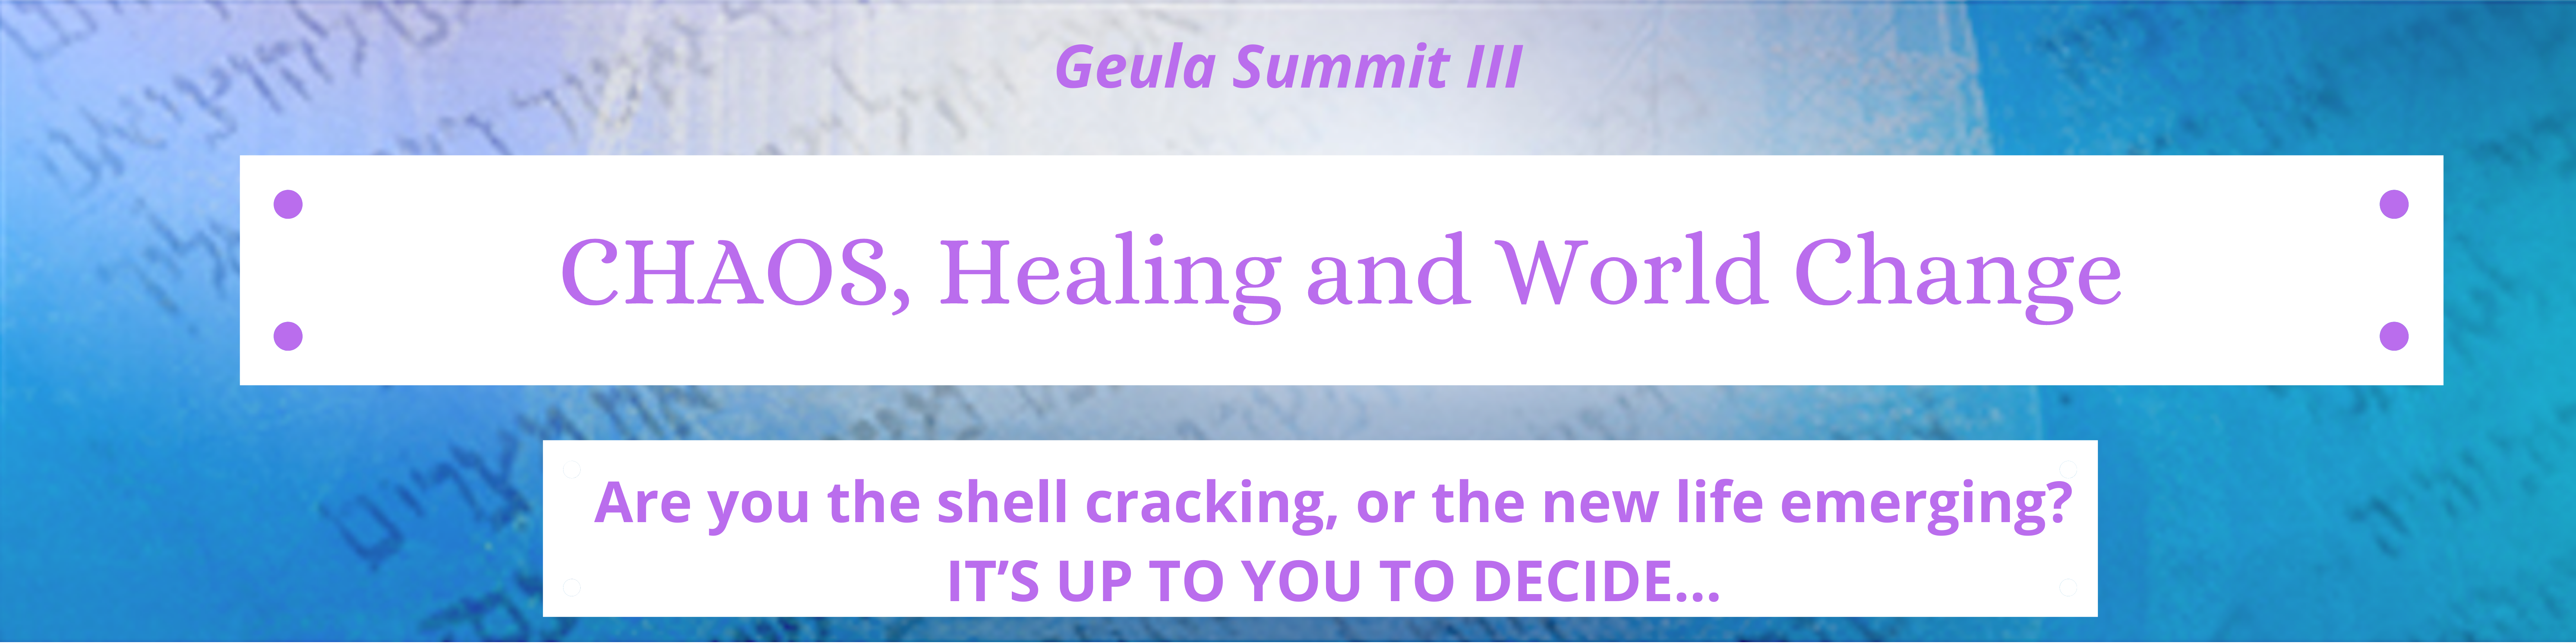 Geula Summit III CHAOS, Healing and World Change is ACTUAL TITLE (5)